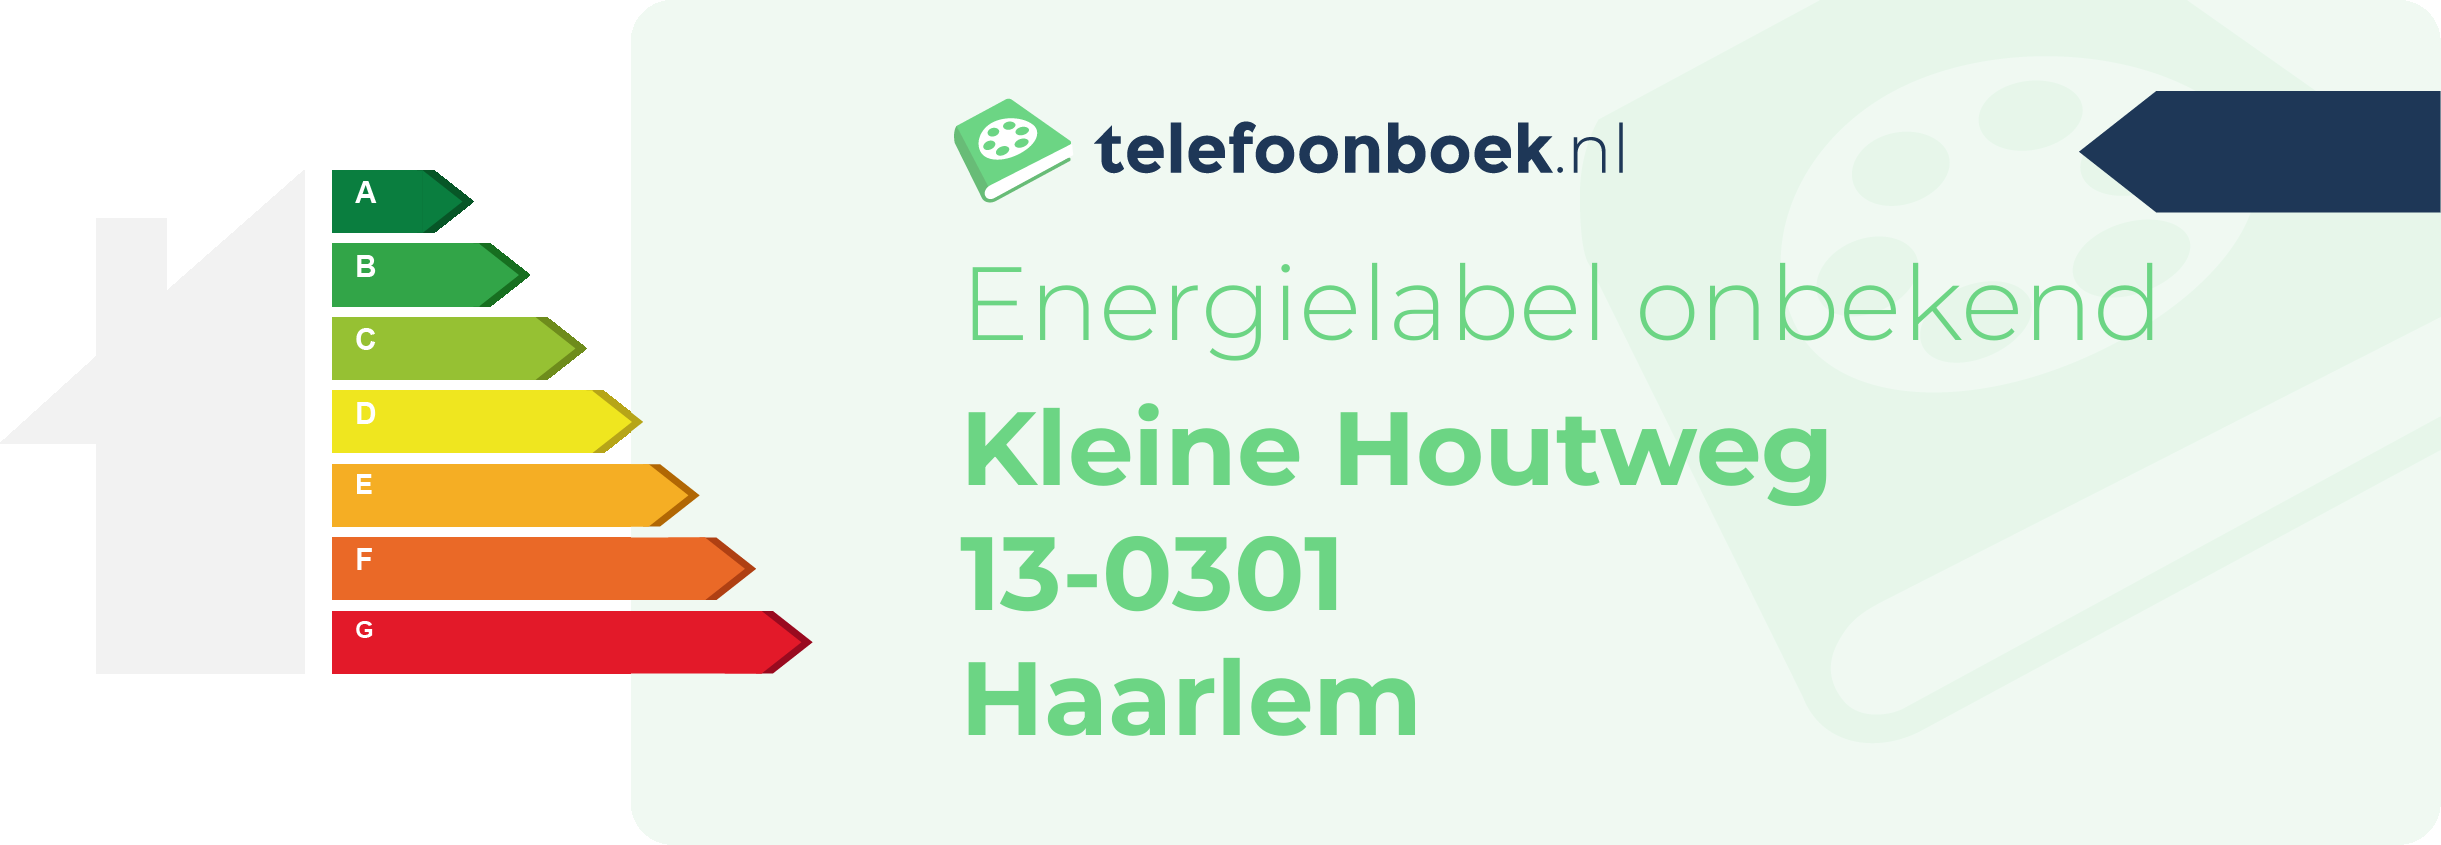 Energielabel Kleine Houtweg 13-0301 Haarlem